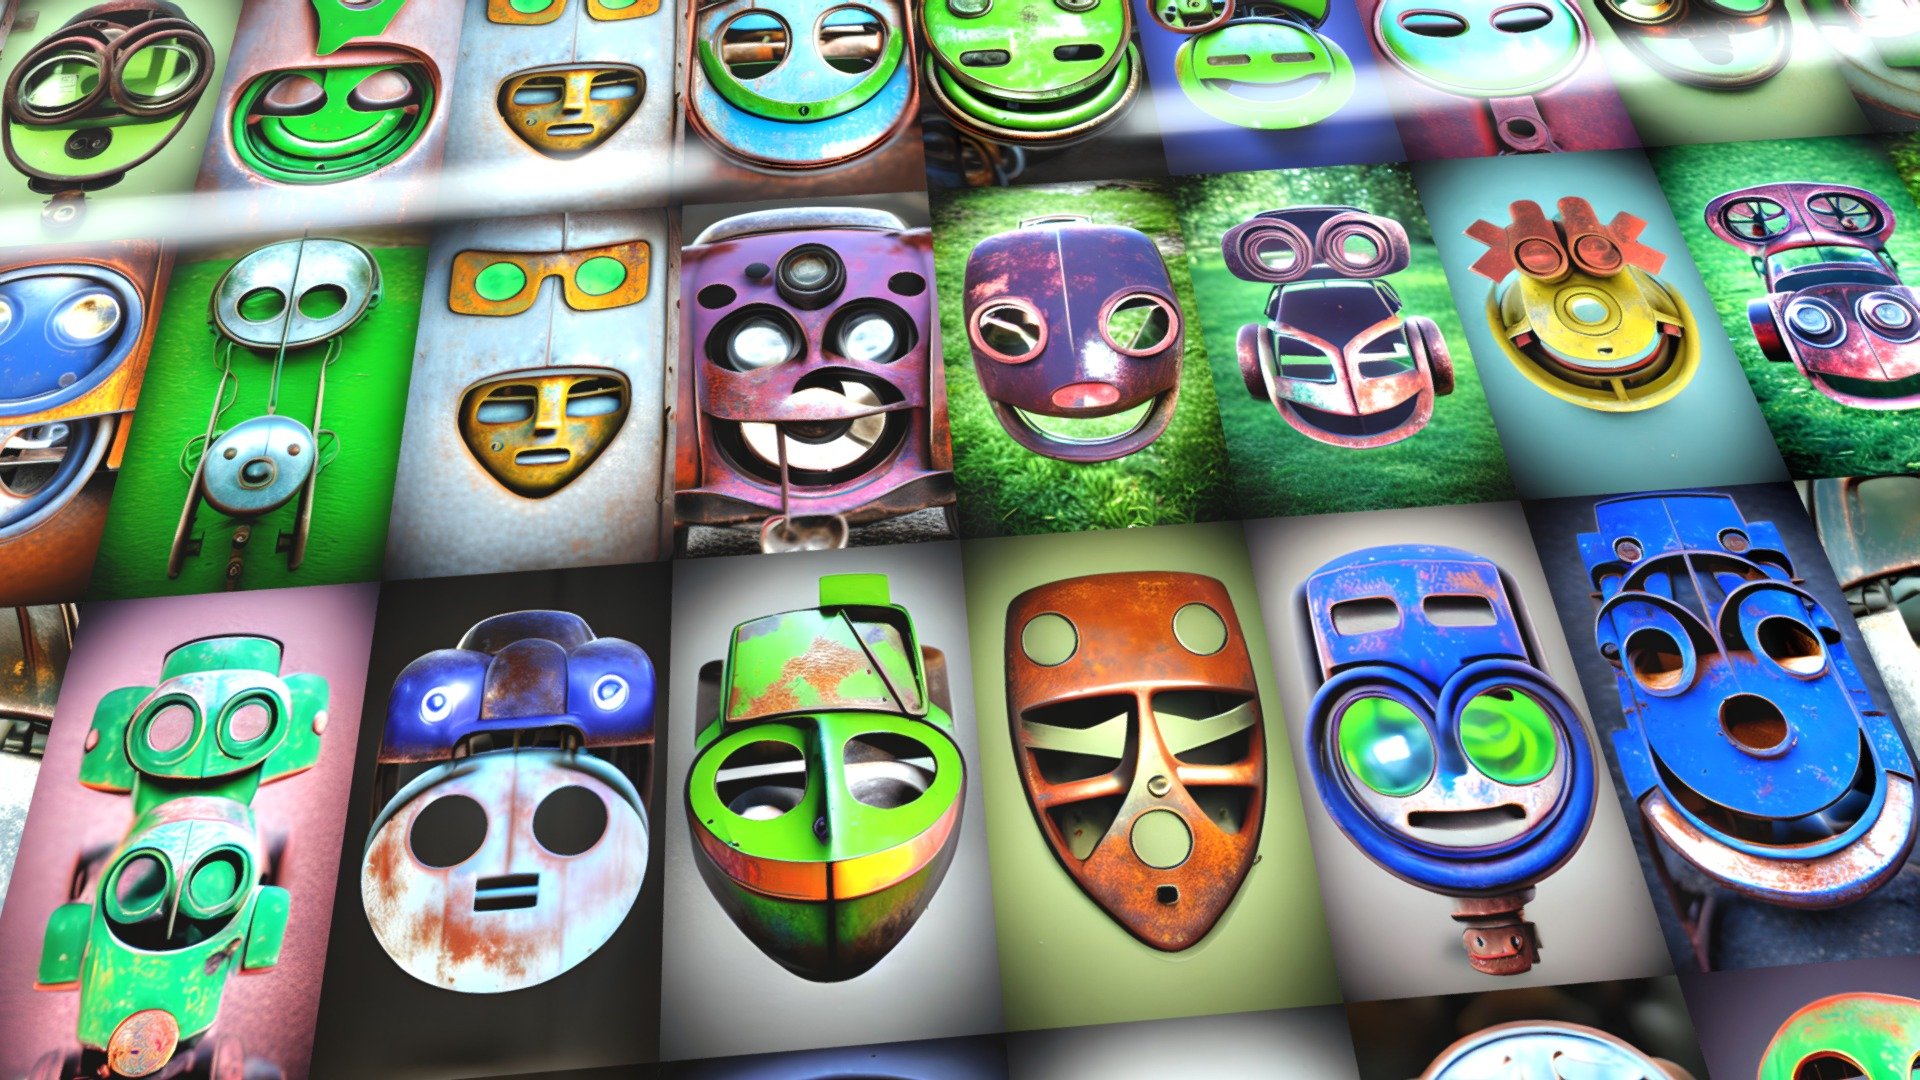 w 548 Robot Emoji 490 mask - Download Free 3D model by klrxyz.